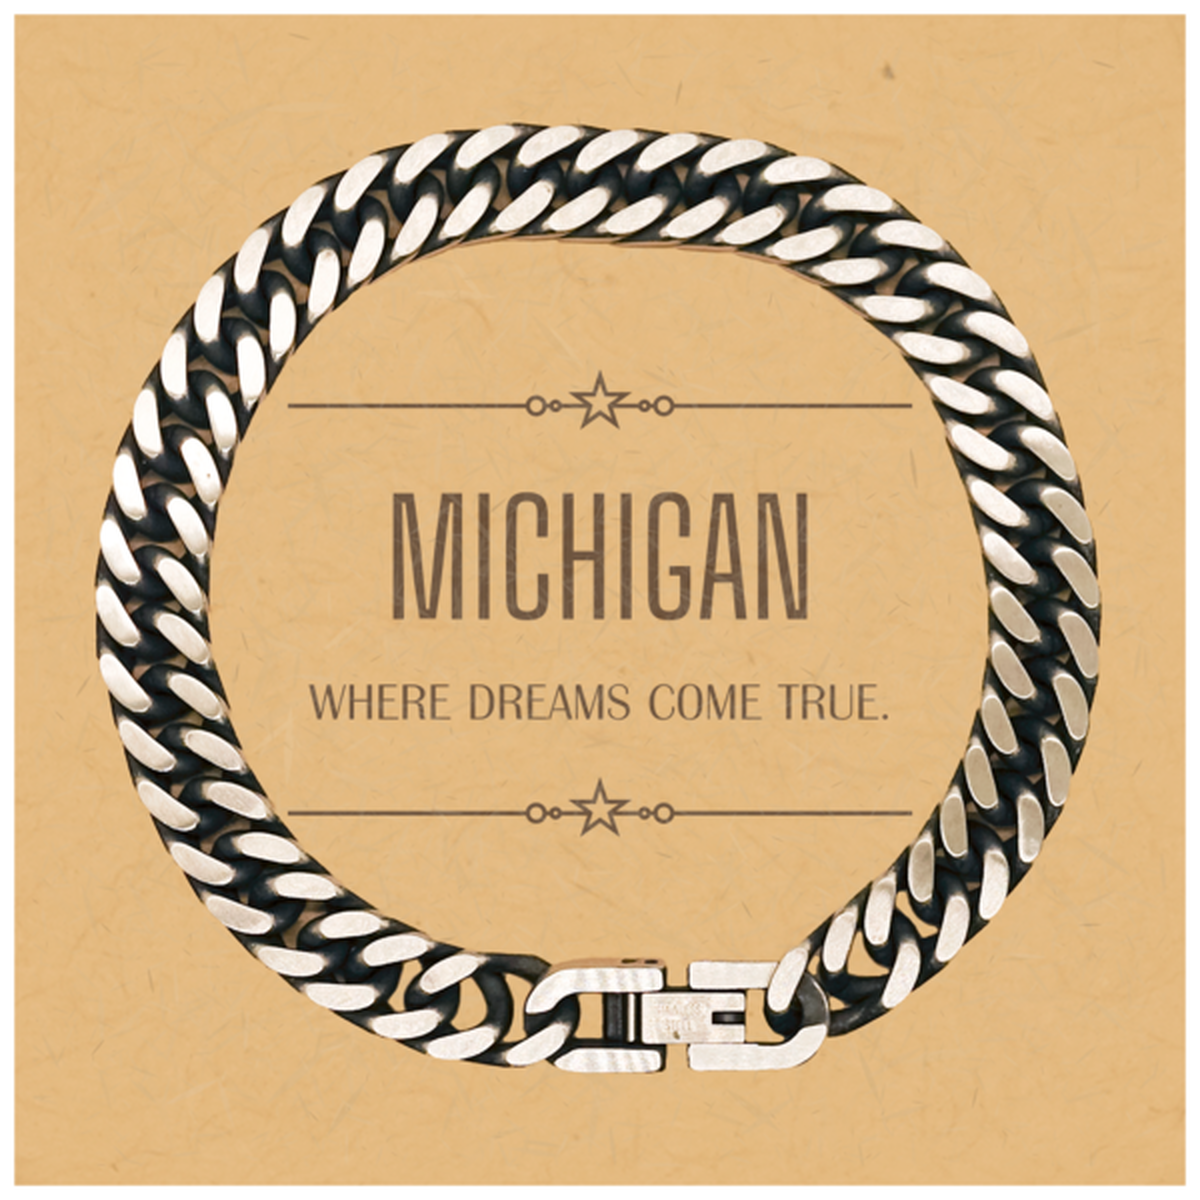 Love Michigan State Cuban Link Chain Bracelet, Michigan Where dreams come true, Birthday Christmas Inspirational Gifts For Michigan Men, Women, Friends